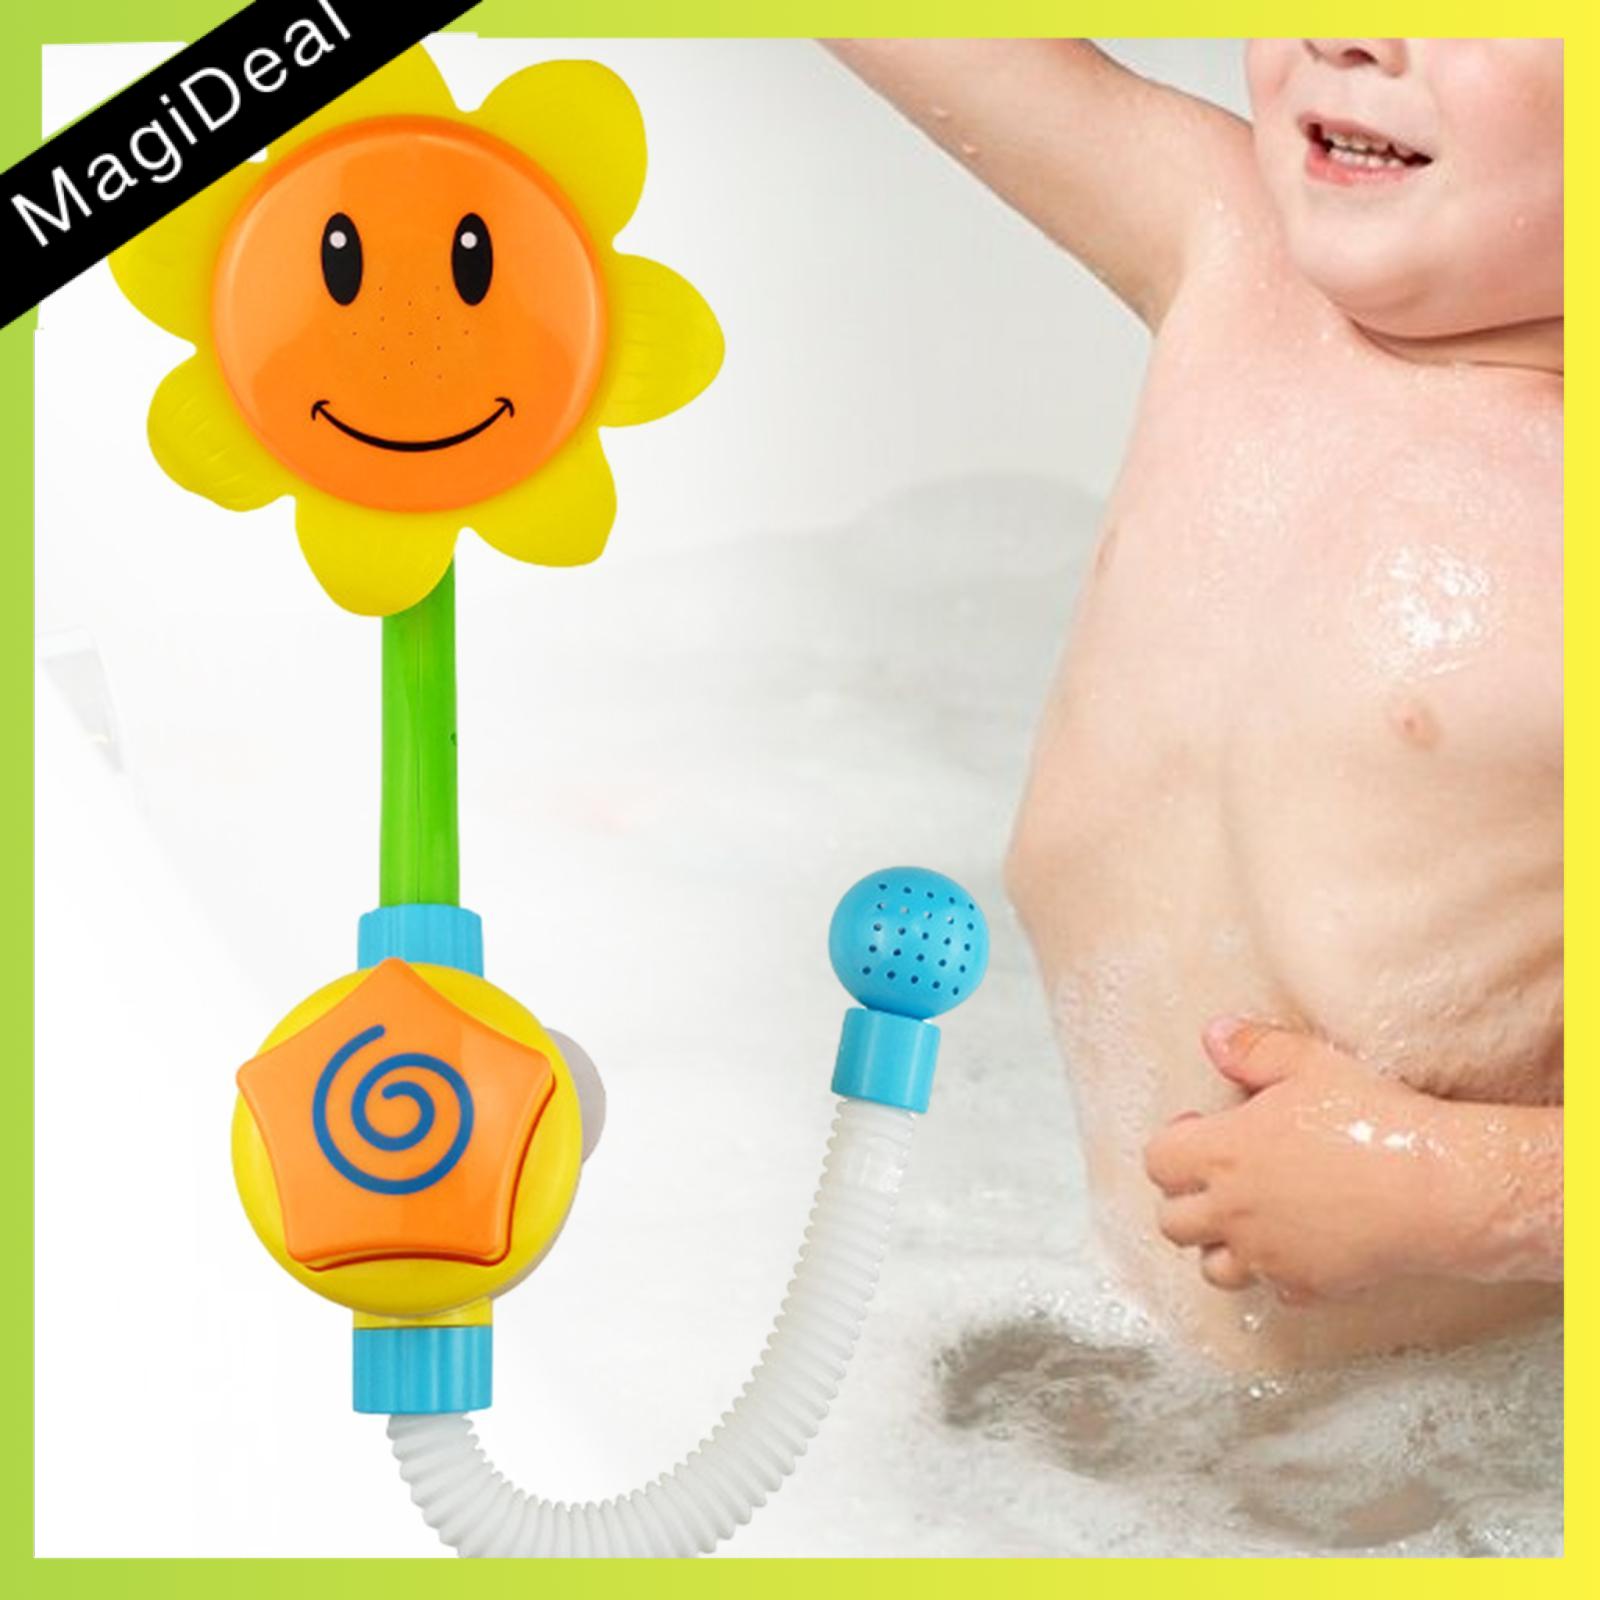 MagiDeal Baby Bath Toy Shower Head Spray Water Toy Manual Shower Bath Toy